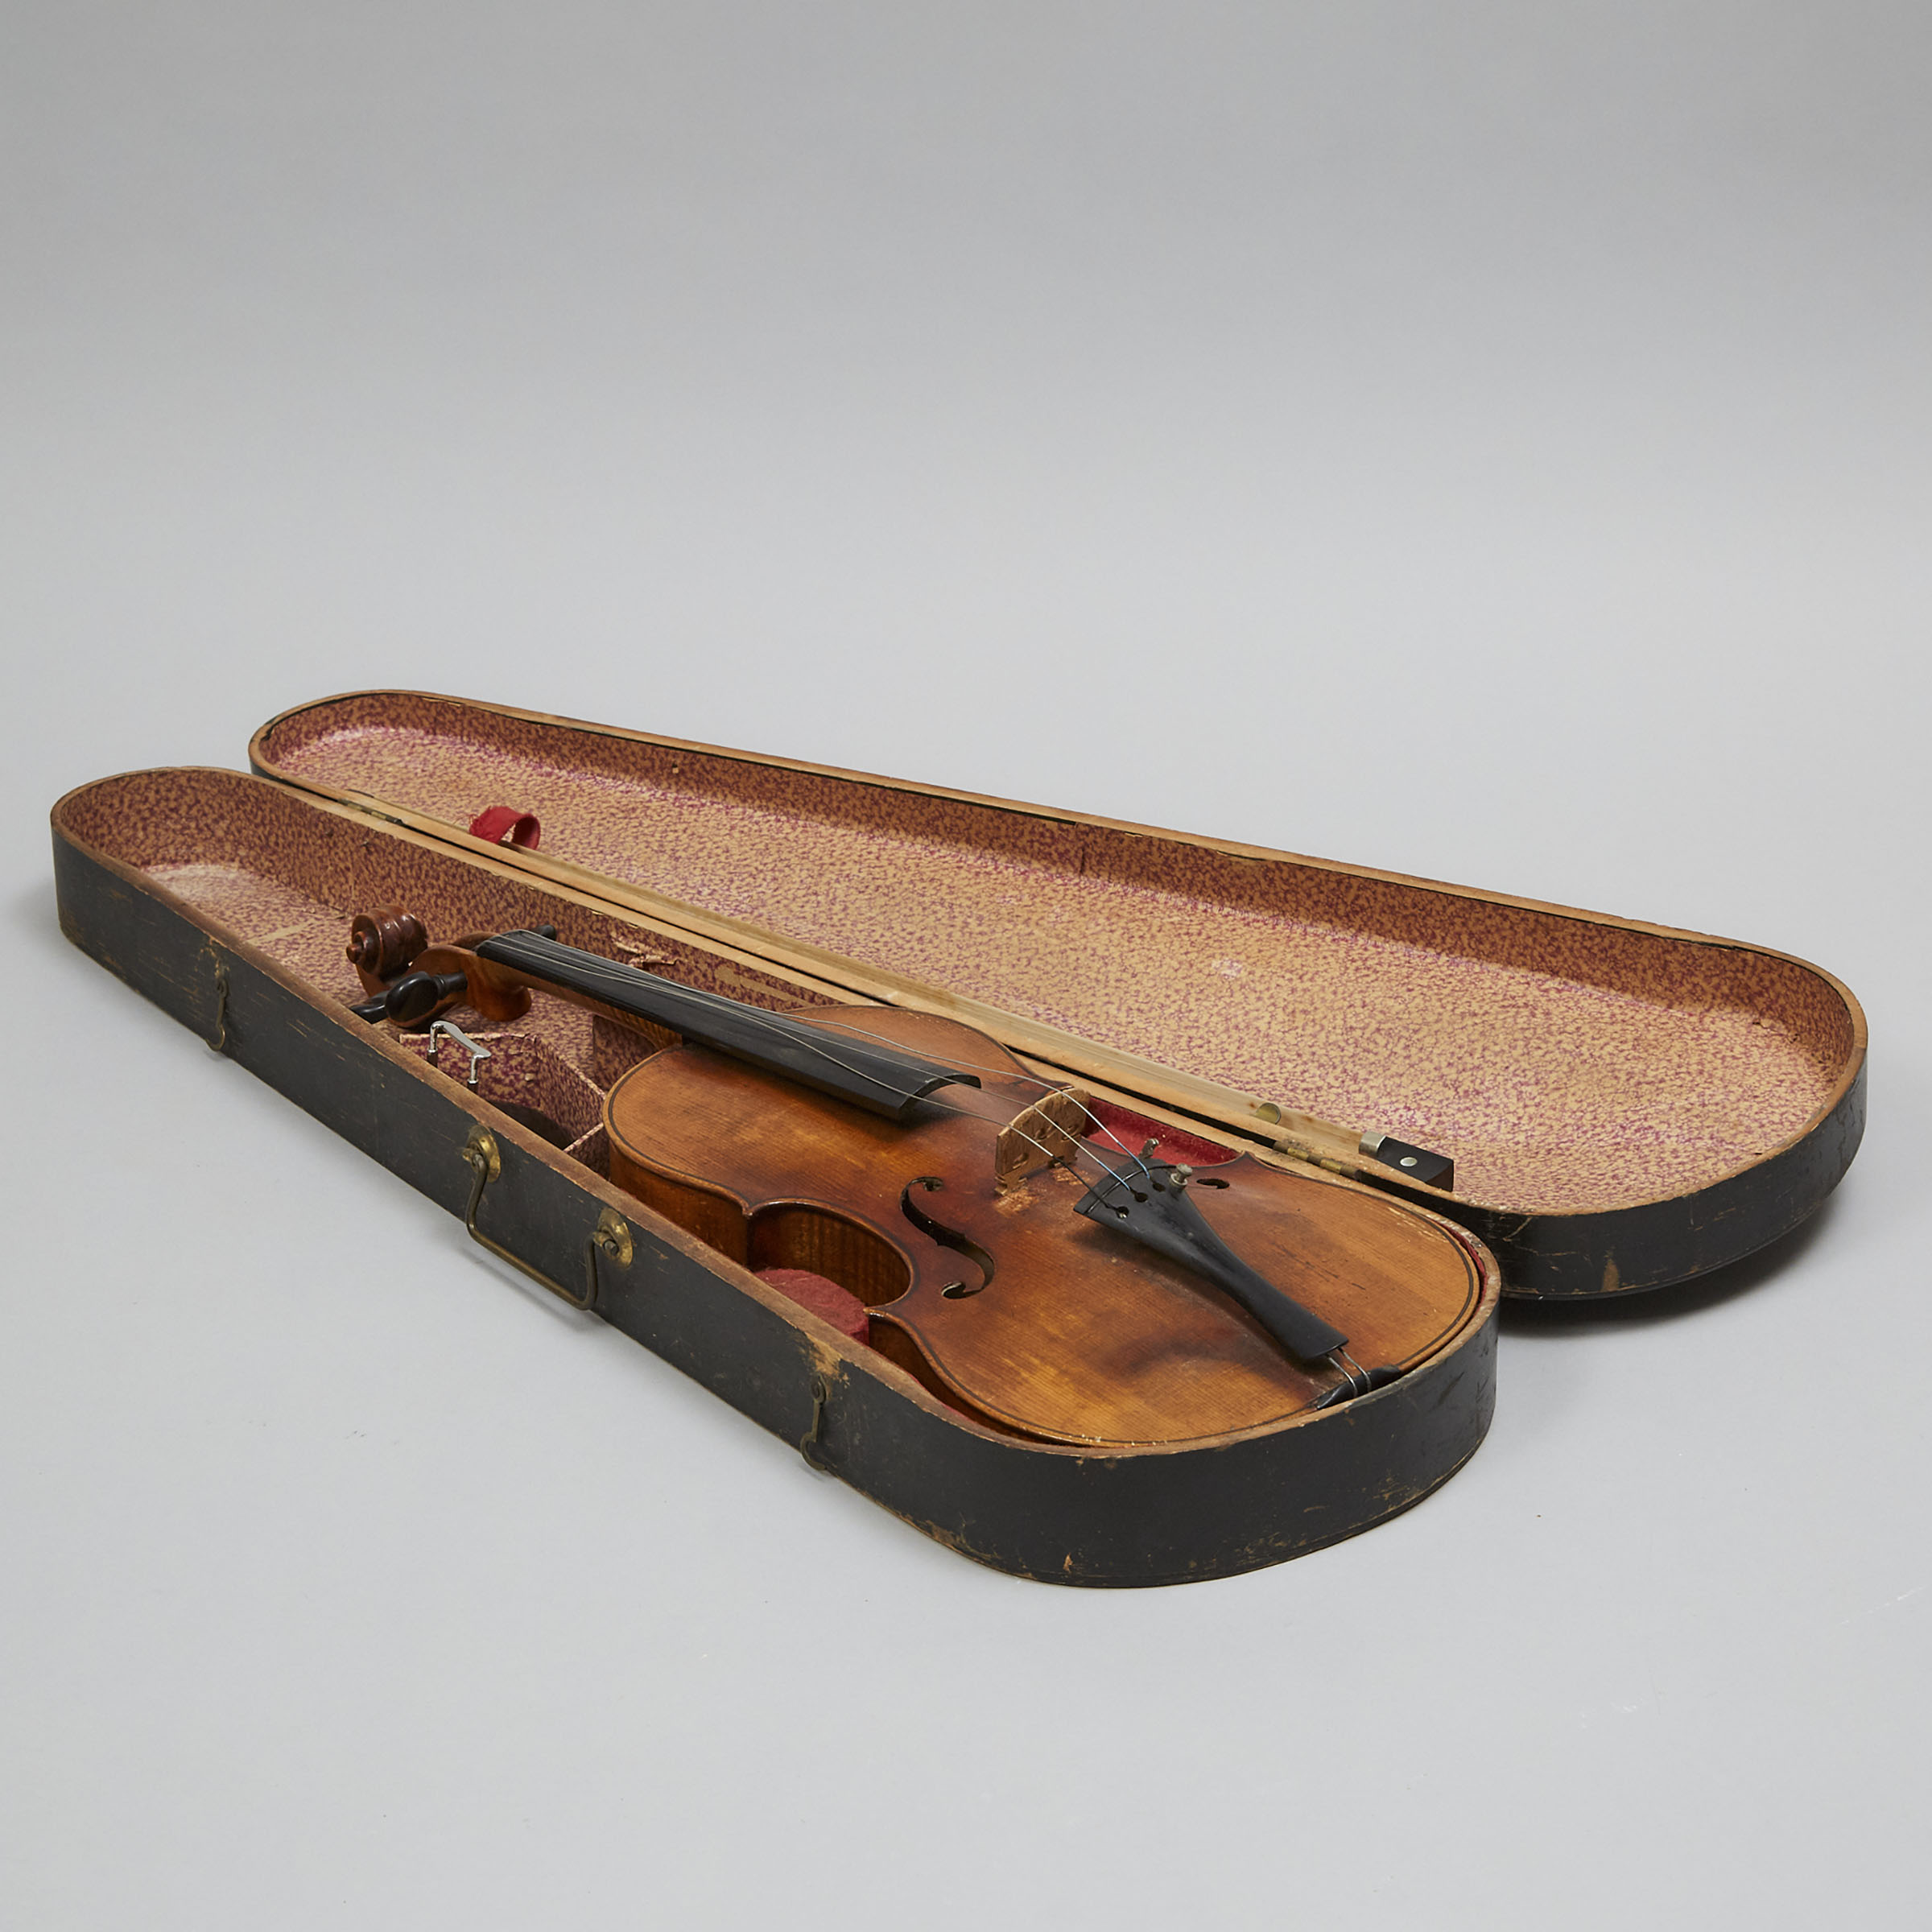 Italian Violin by Pietro Vareni, Naples, 1910